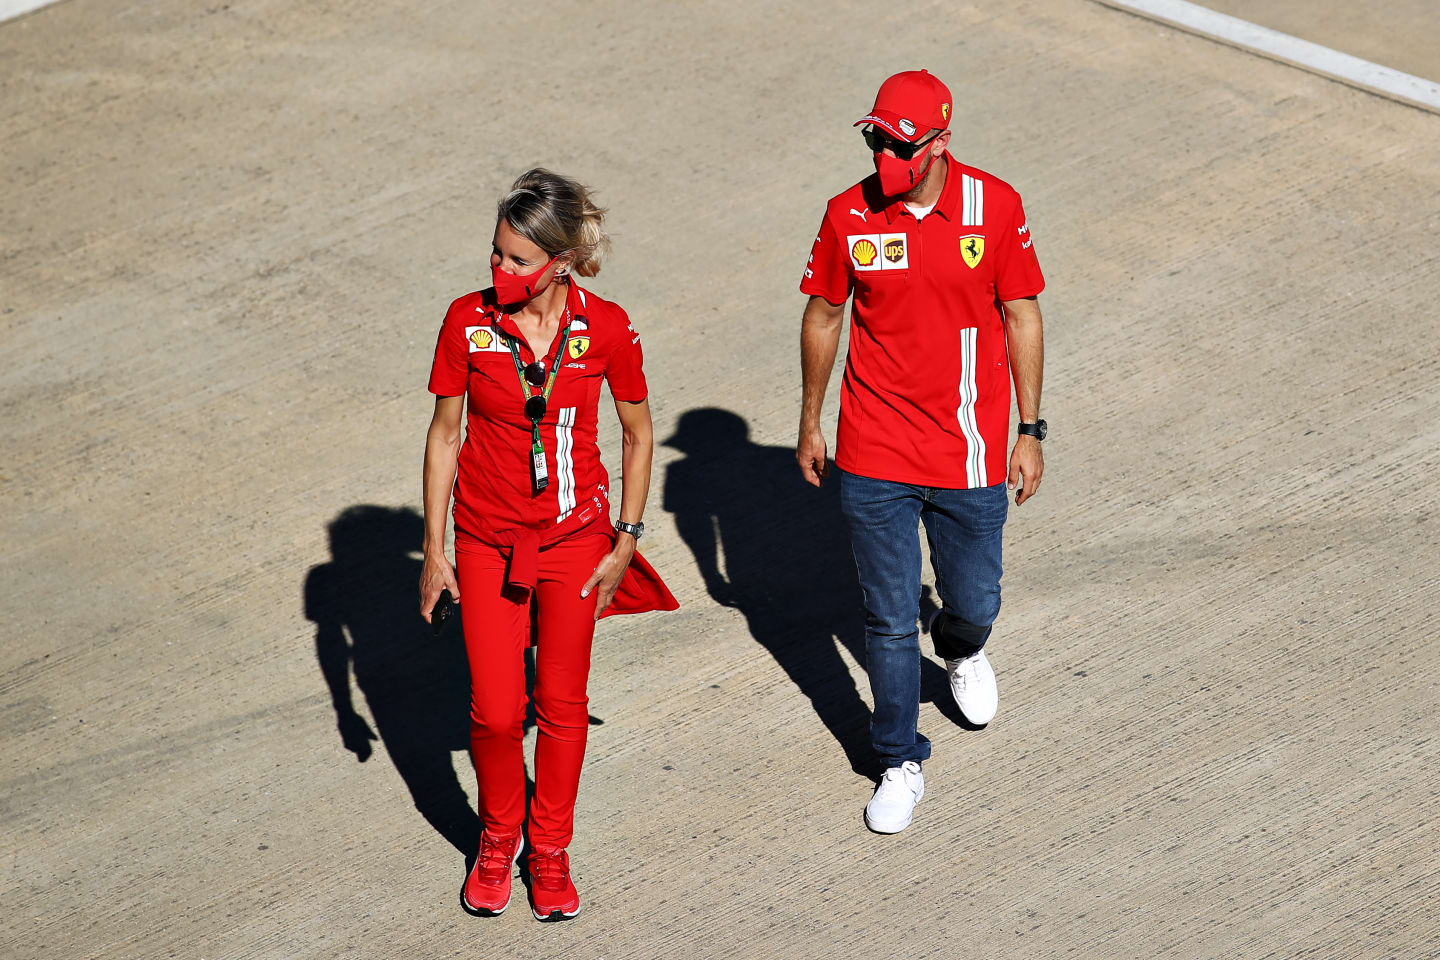 NORTHAMPTON, ENGLAND - JULY 30: Sebastian Vettel of Germany and Ferrari walks in the Paddock during